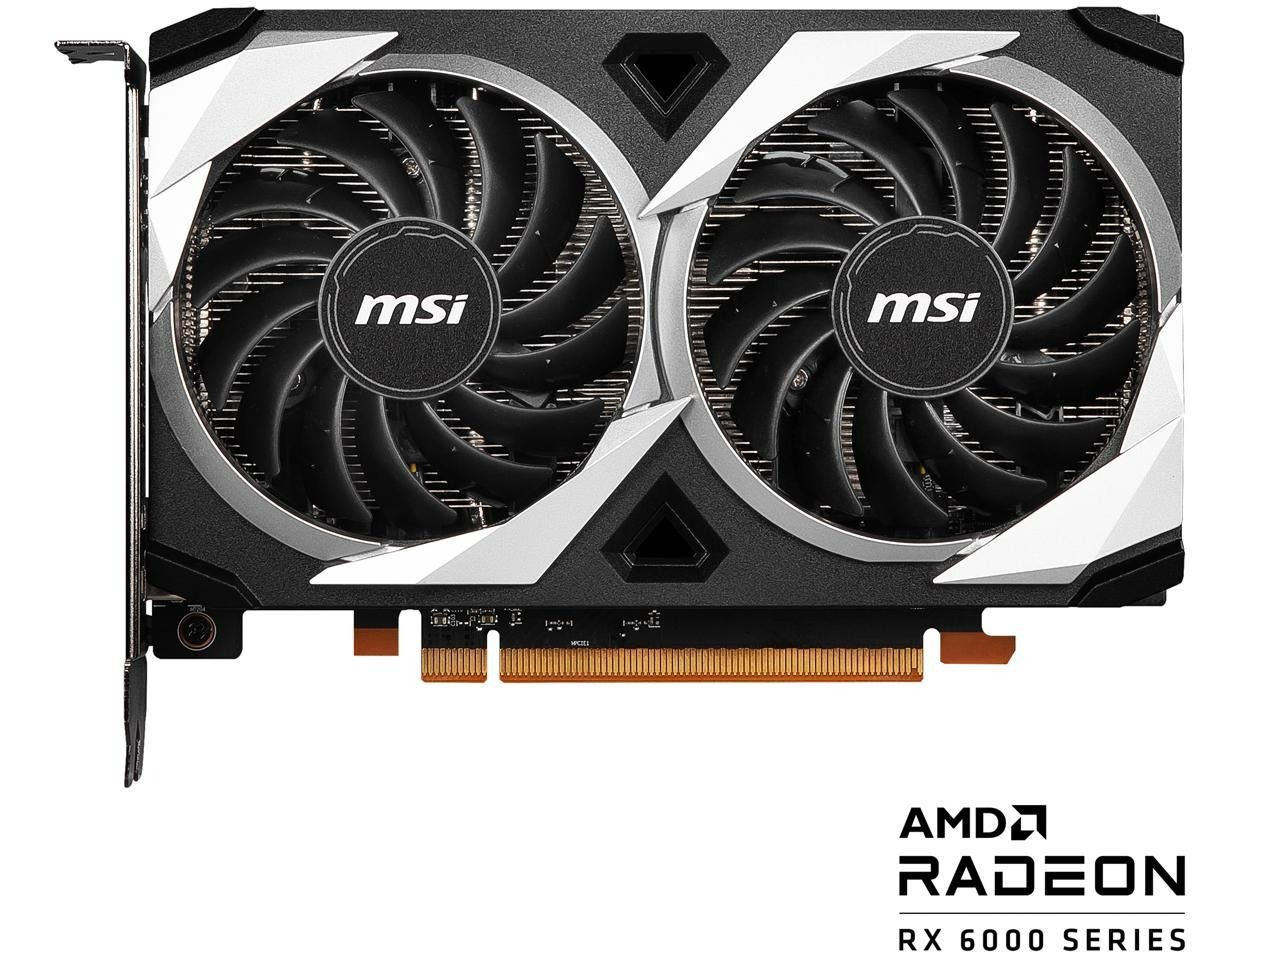 MSI Mech Radeon RX 6500 XT 4GB GDDR6 $134.99 after $15.00 rebate card